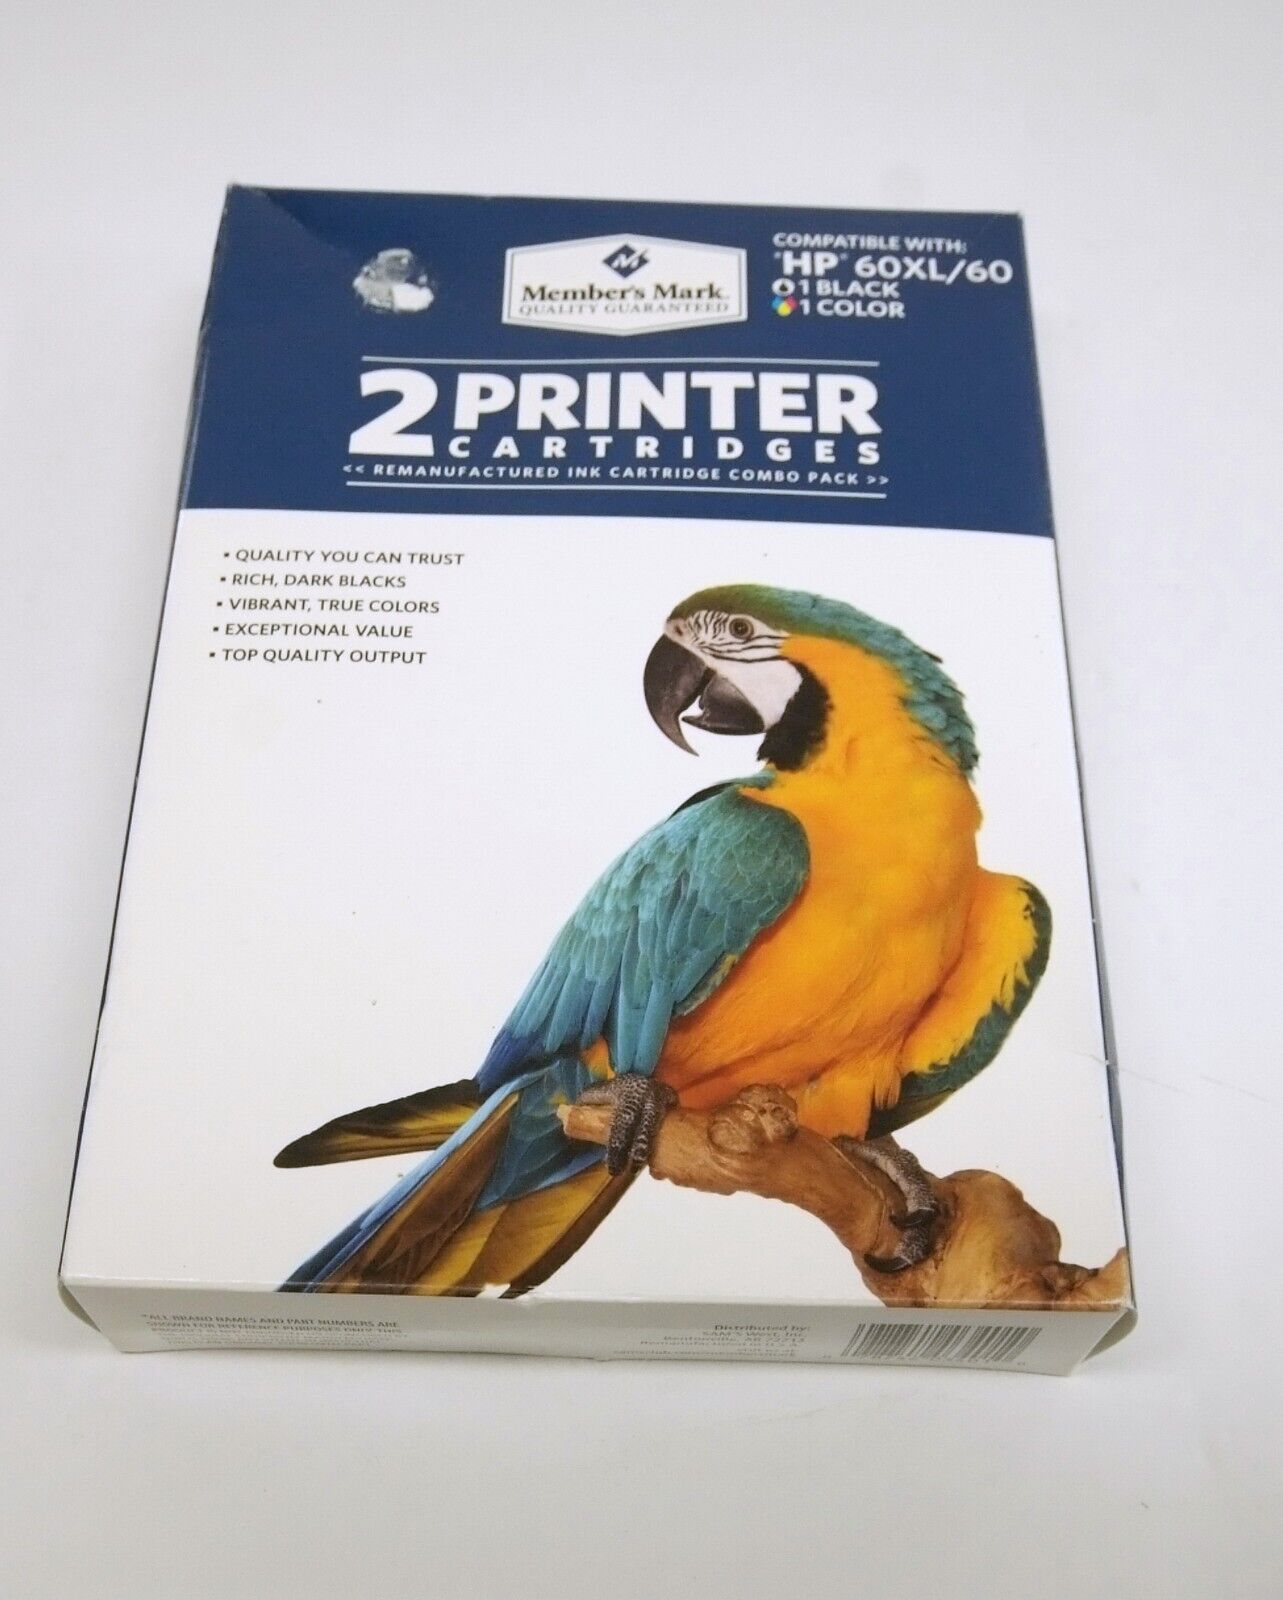 Member's Mark HP Compatable Inkjet Printer Ink Cartridges HP 60XL/60 Black/Color